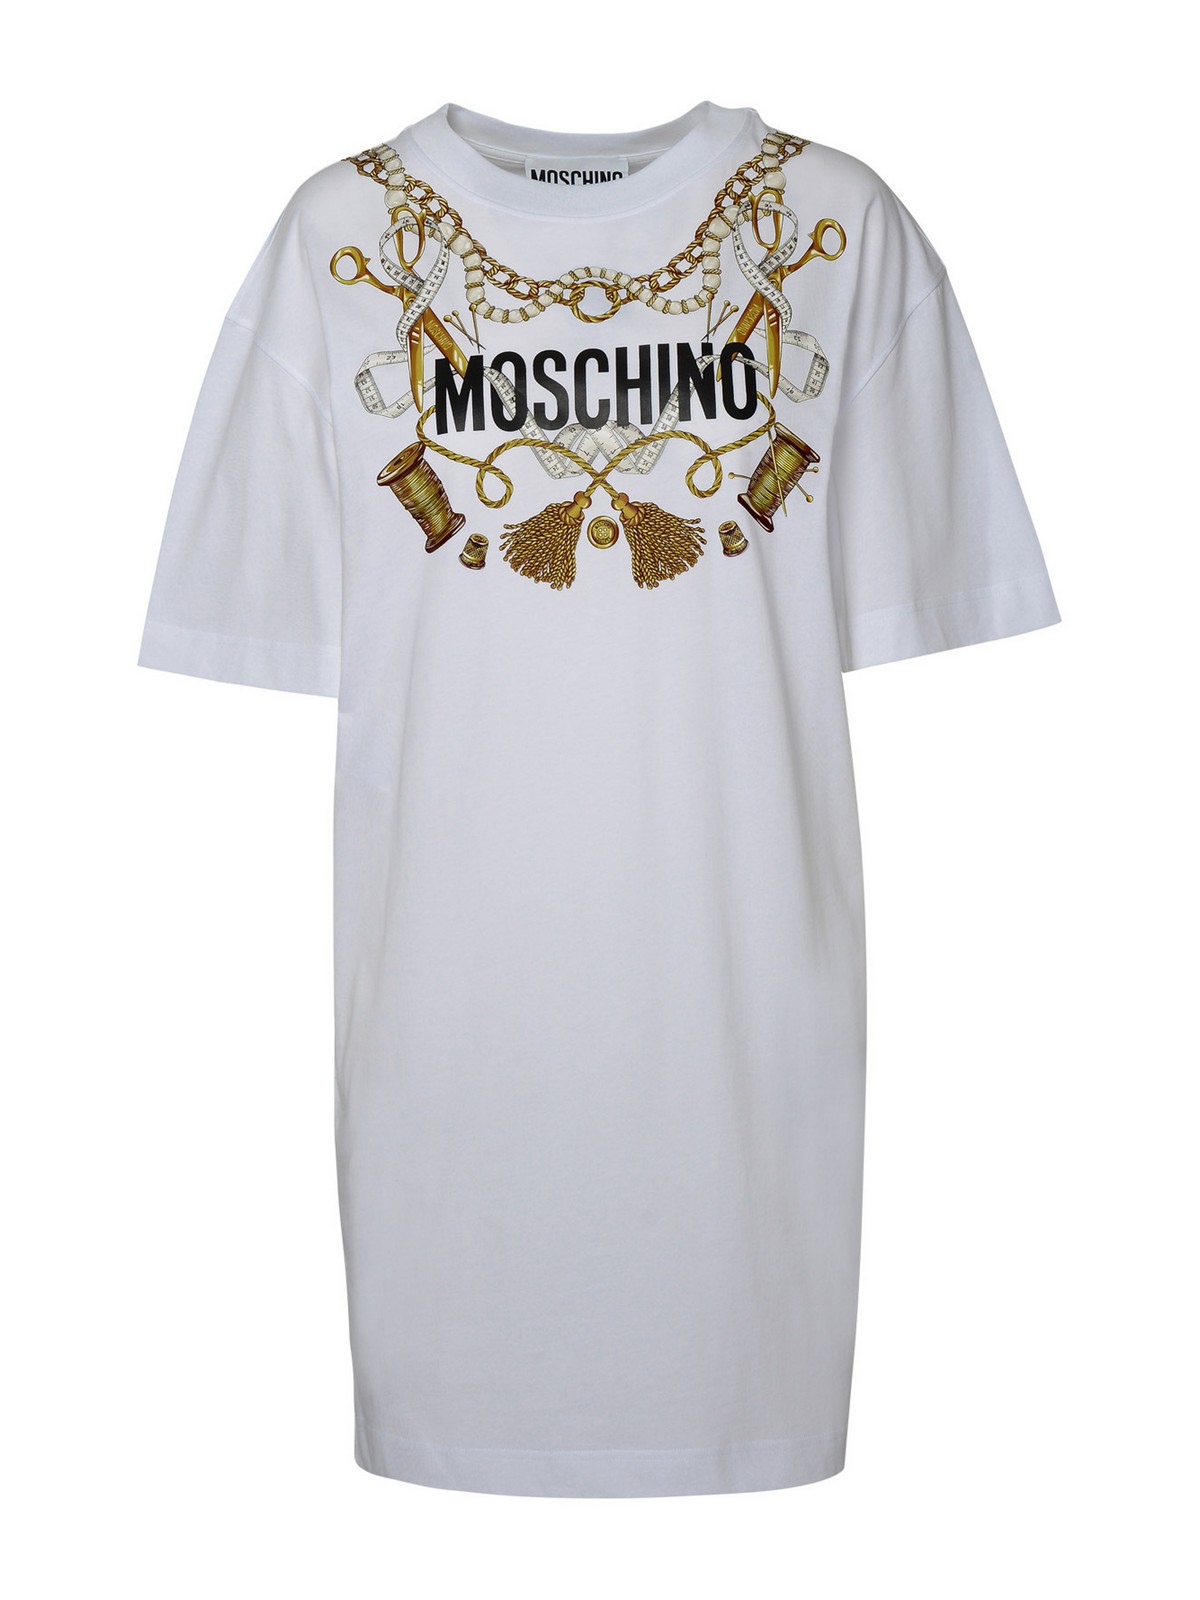 Moschino White Cotton Dress